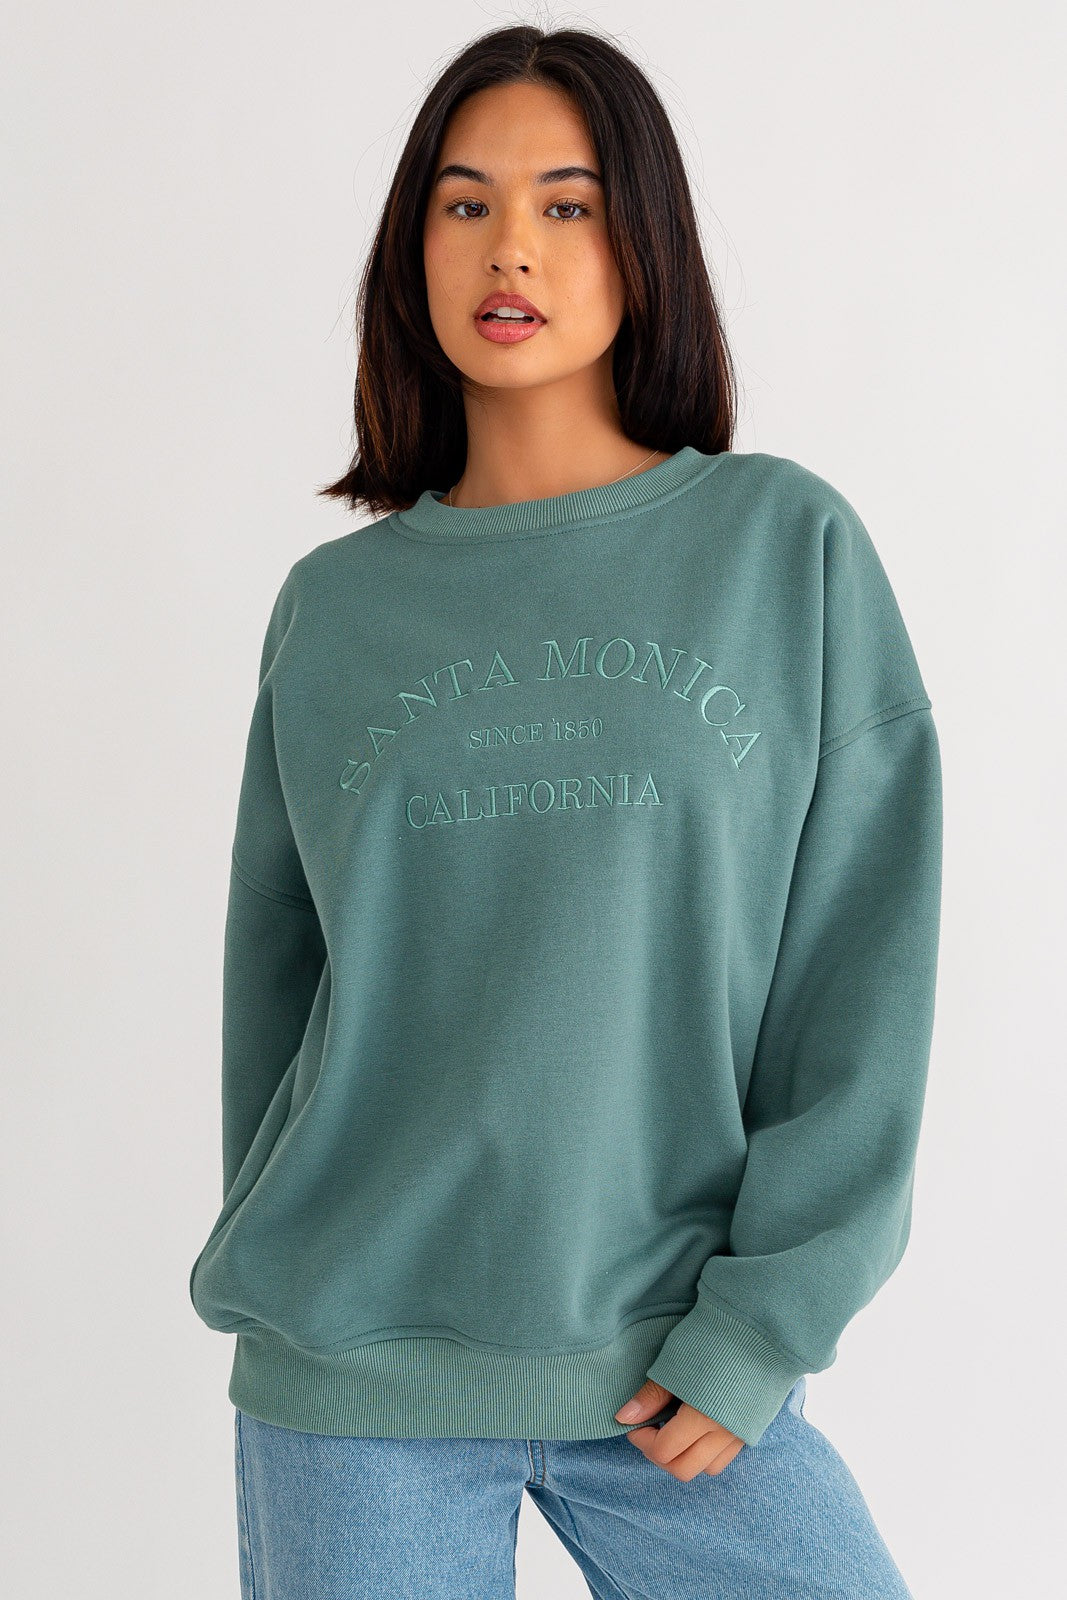 Santa Monica Sweatshirt - Proper